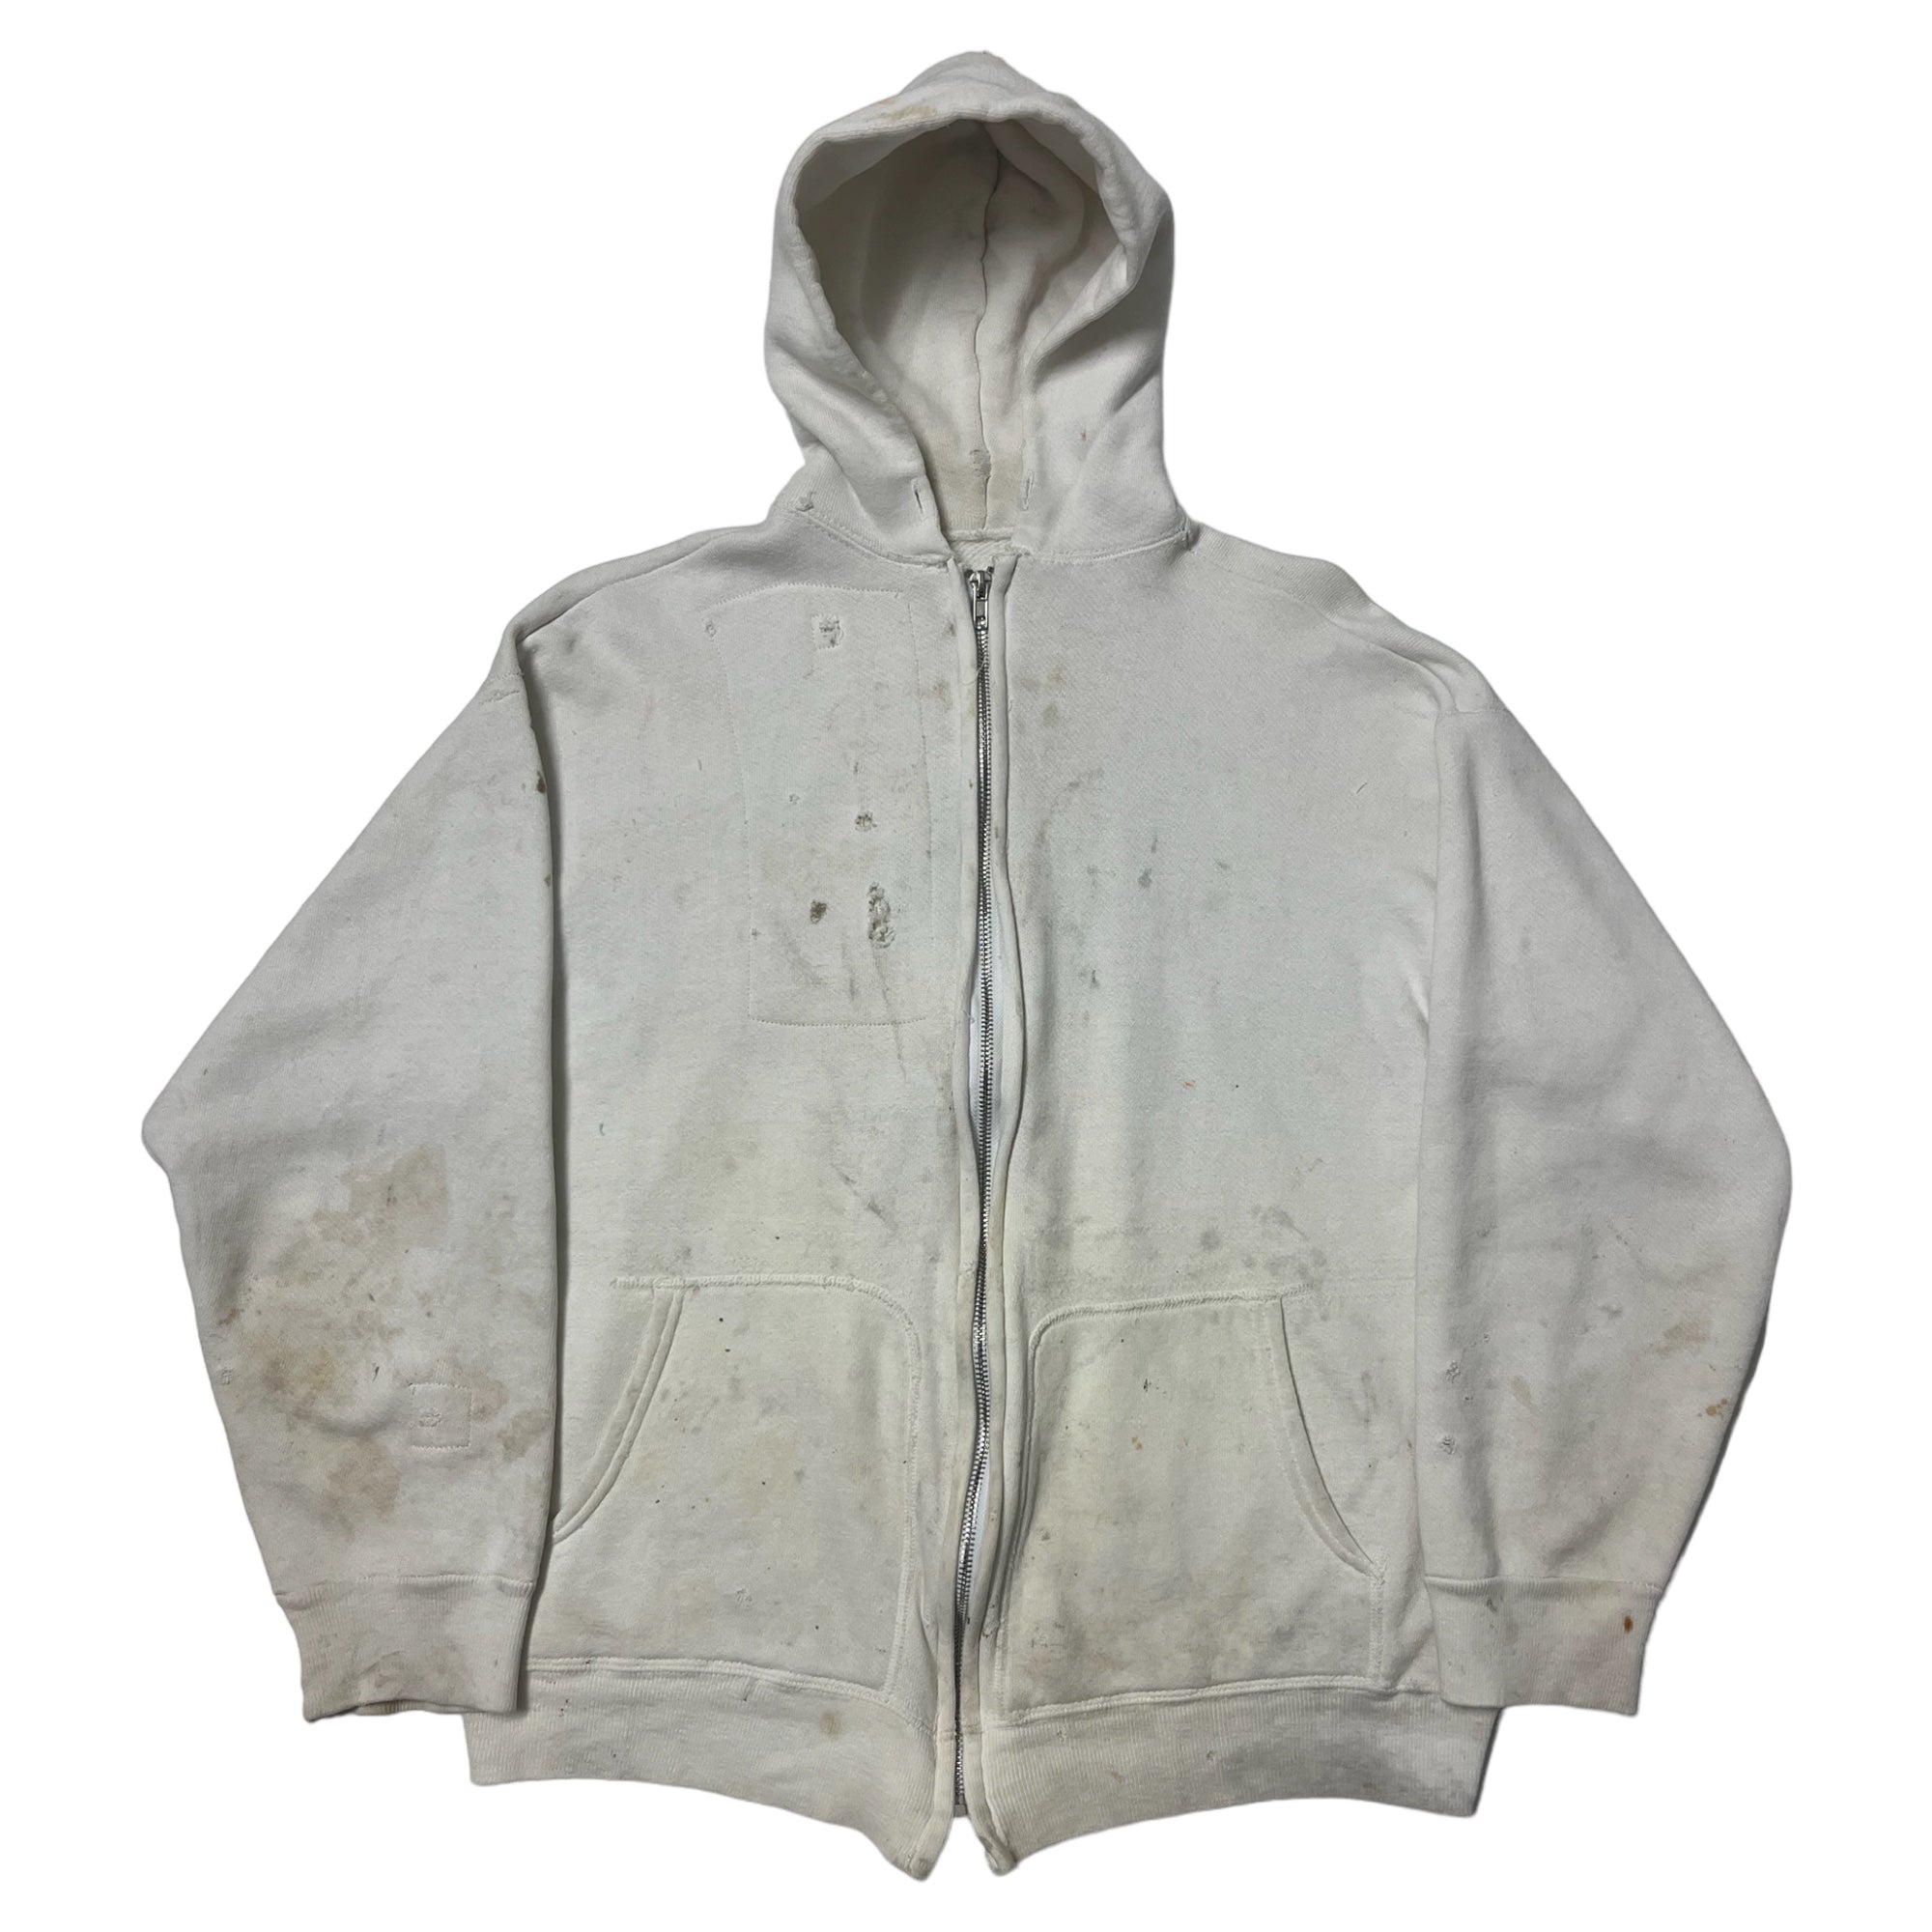 1970s Distressed & Repaired Zip-Up Hooded Sweatshirt - Aged Ecru/White - S/M